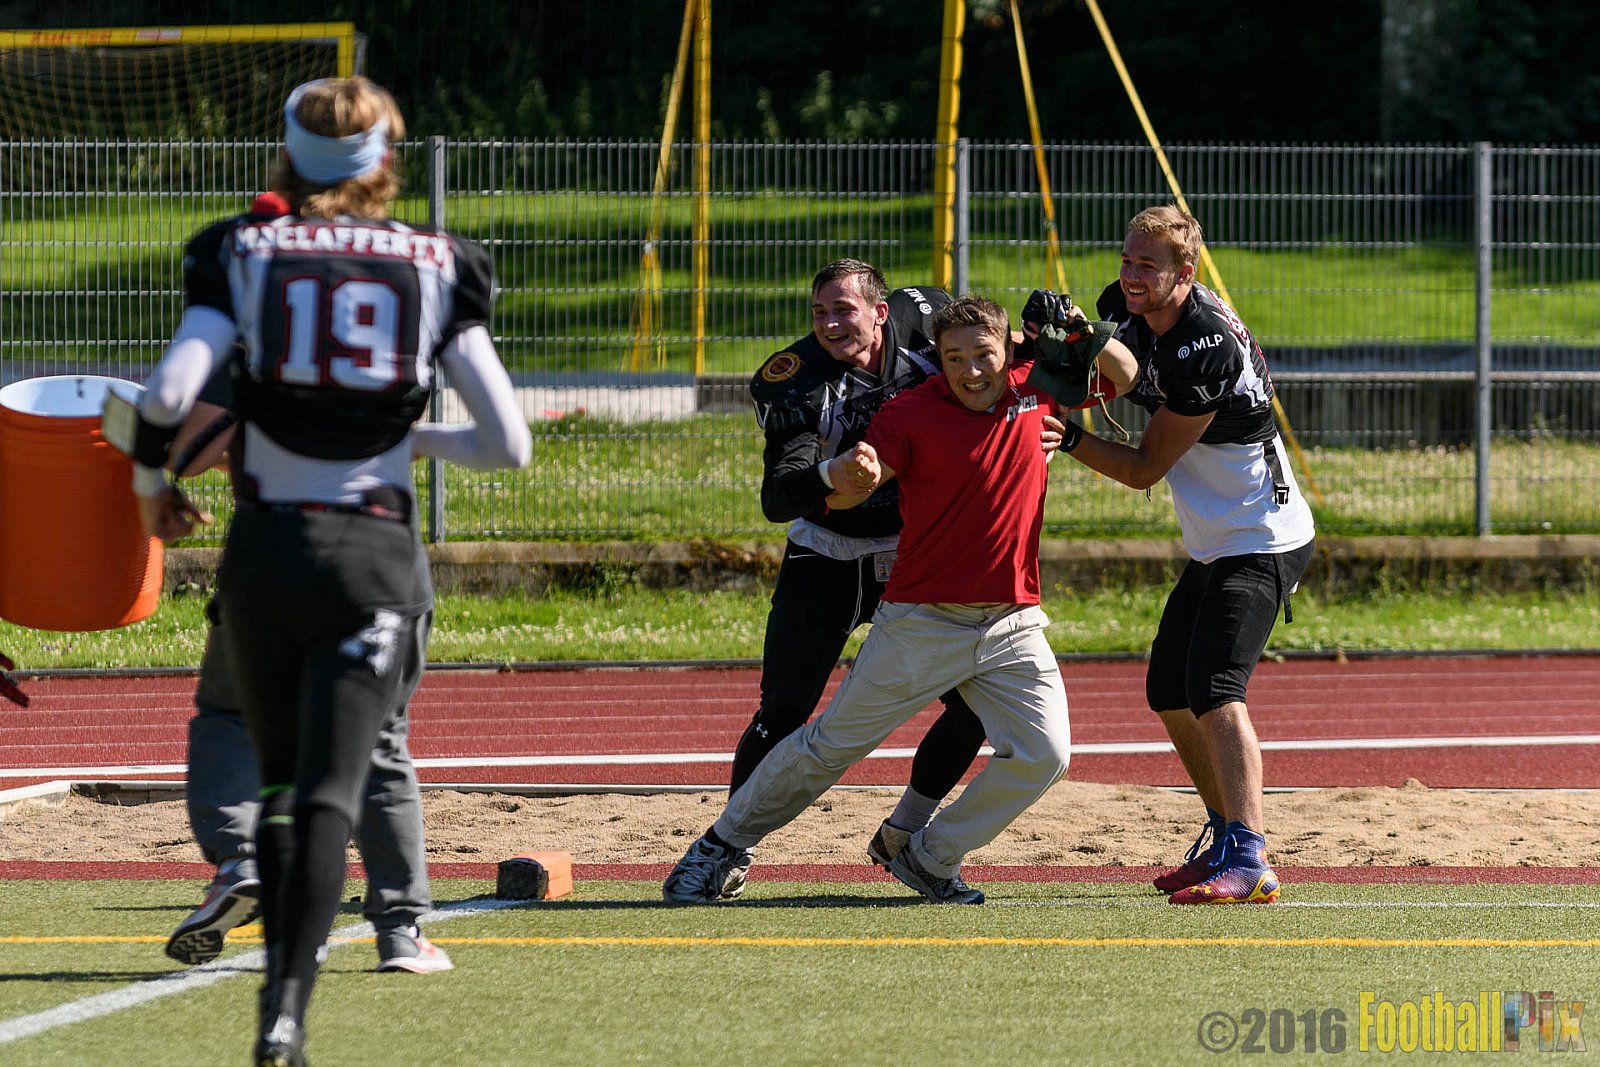 Cologne Falcons vs. Aachen Vampires - 03.07.2016 RL NRW: Cologne Falcons vs. Aachen Vampires (0:3)